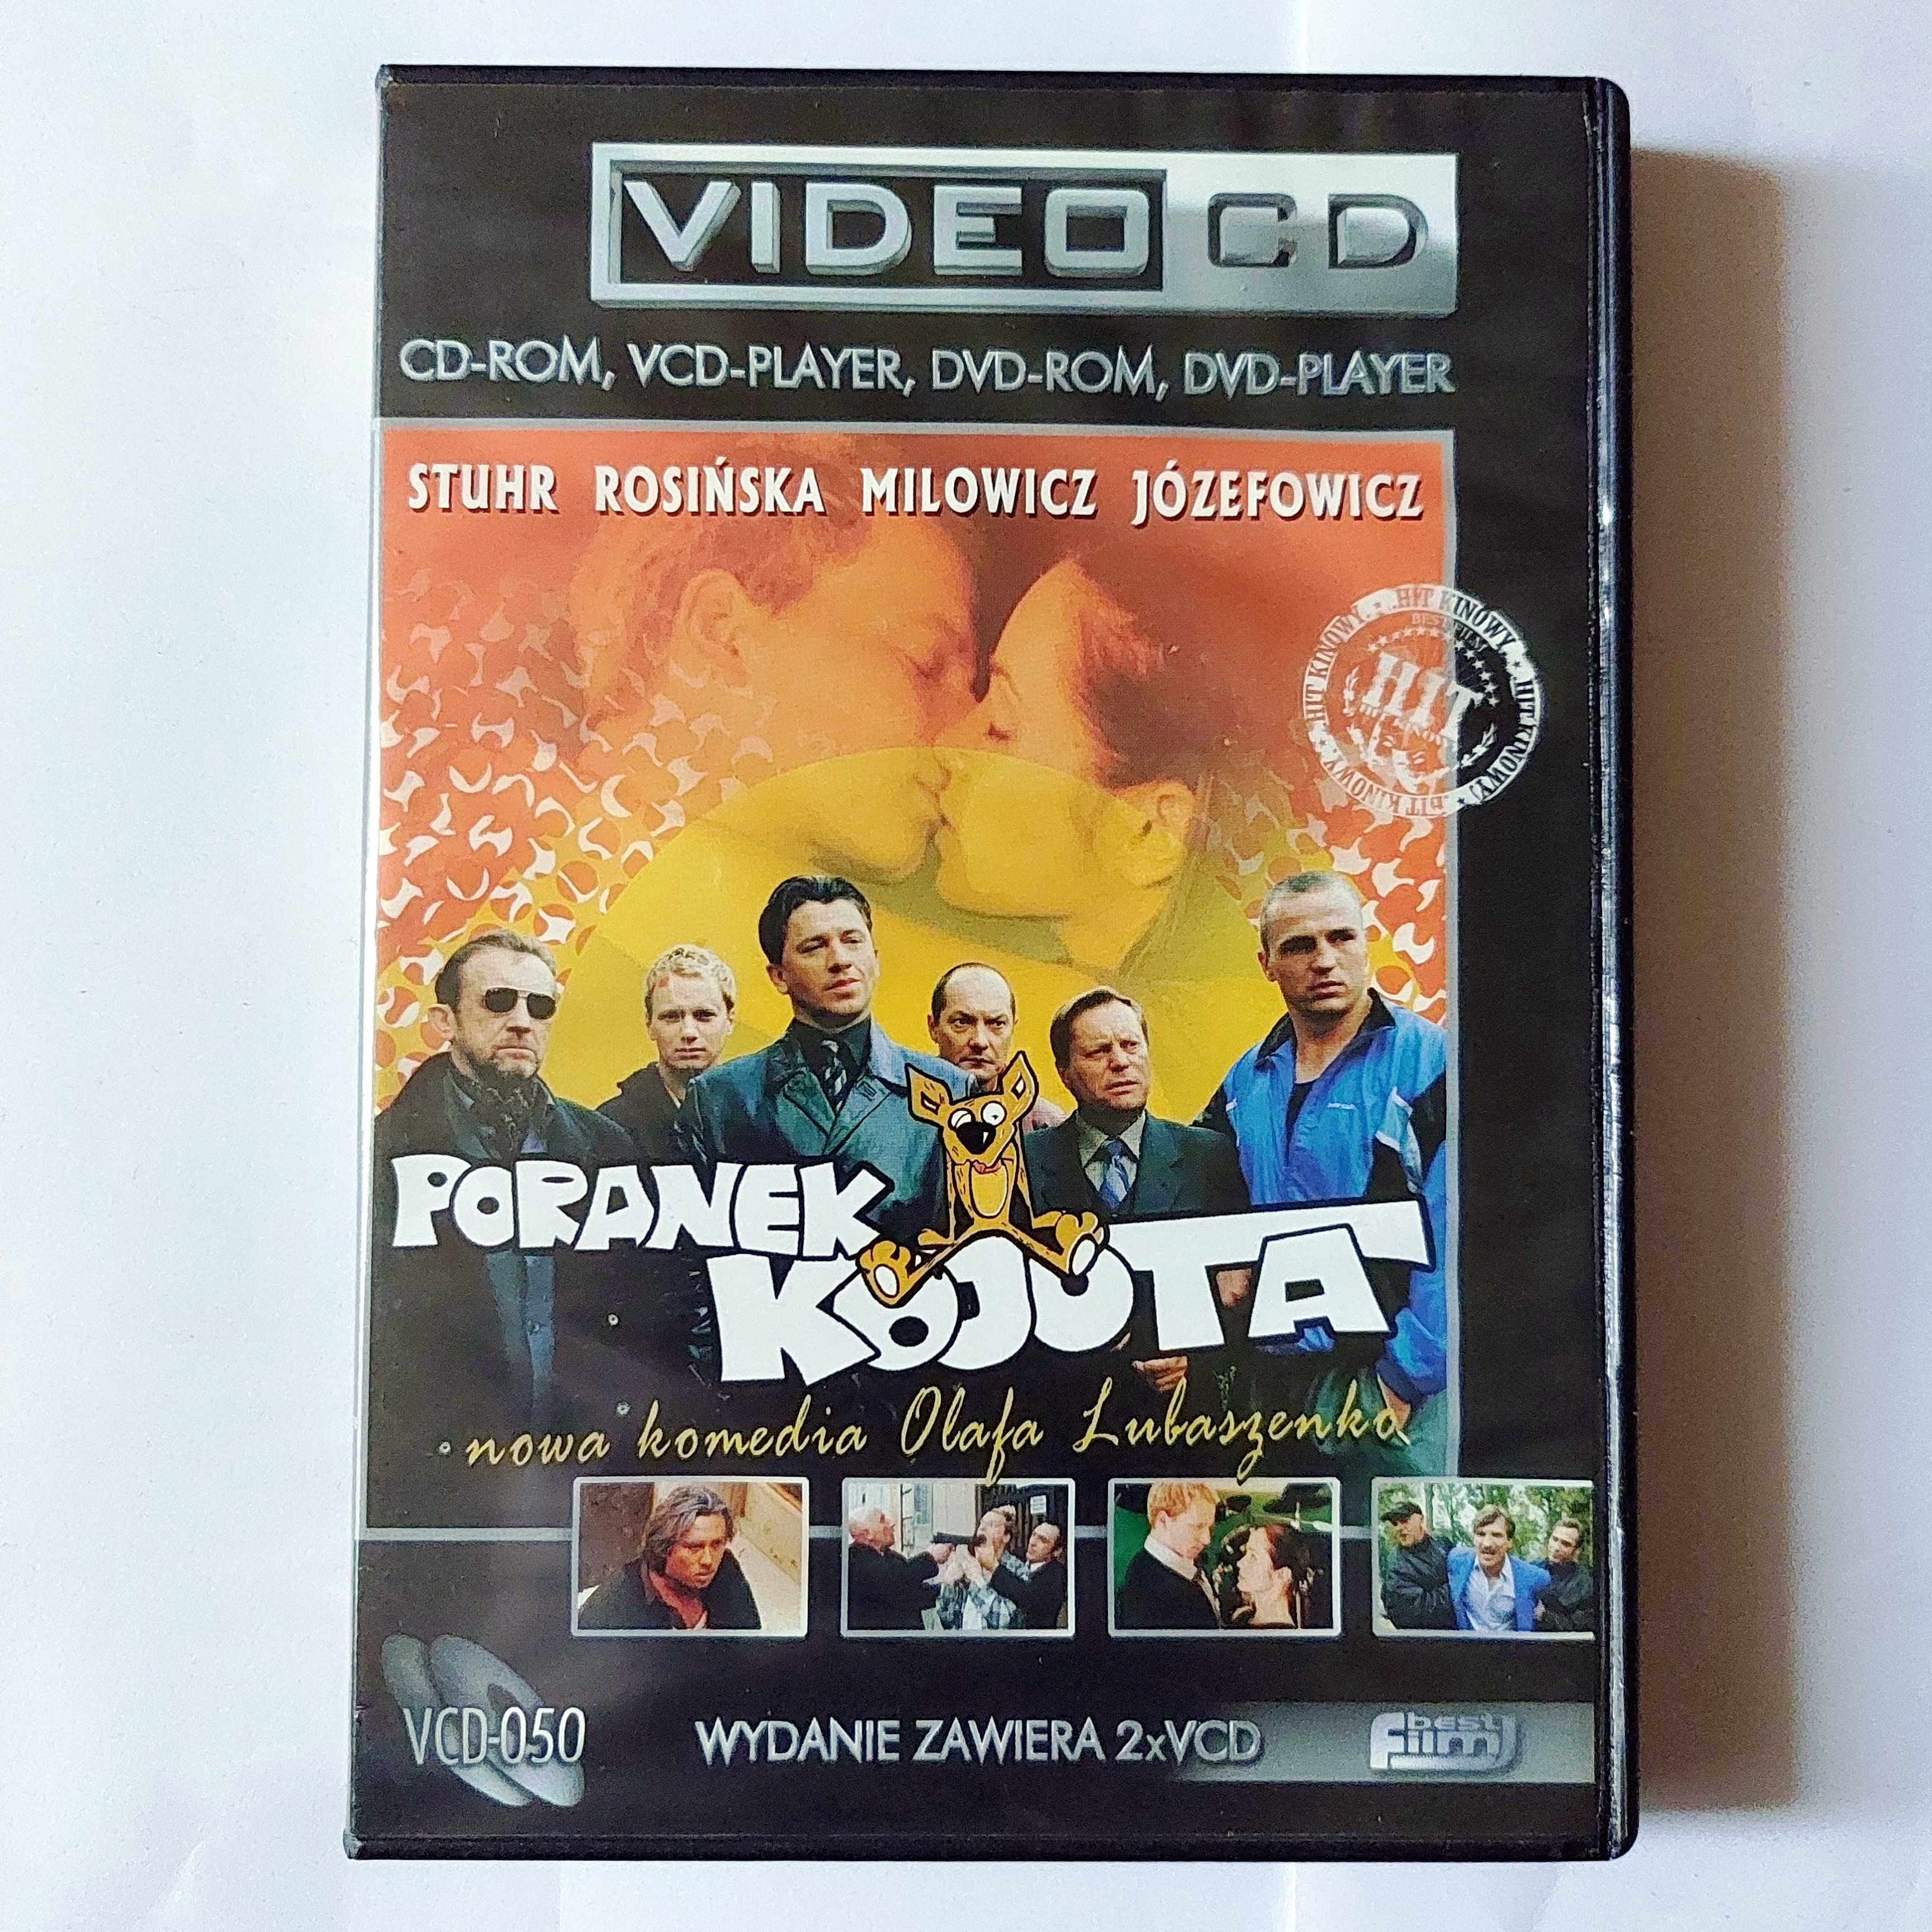 PORANEK KOJOTA | polska kultowa komedia na DVD/VCD